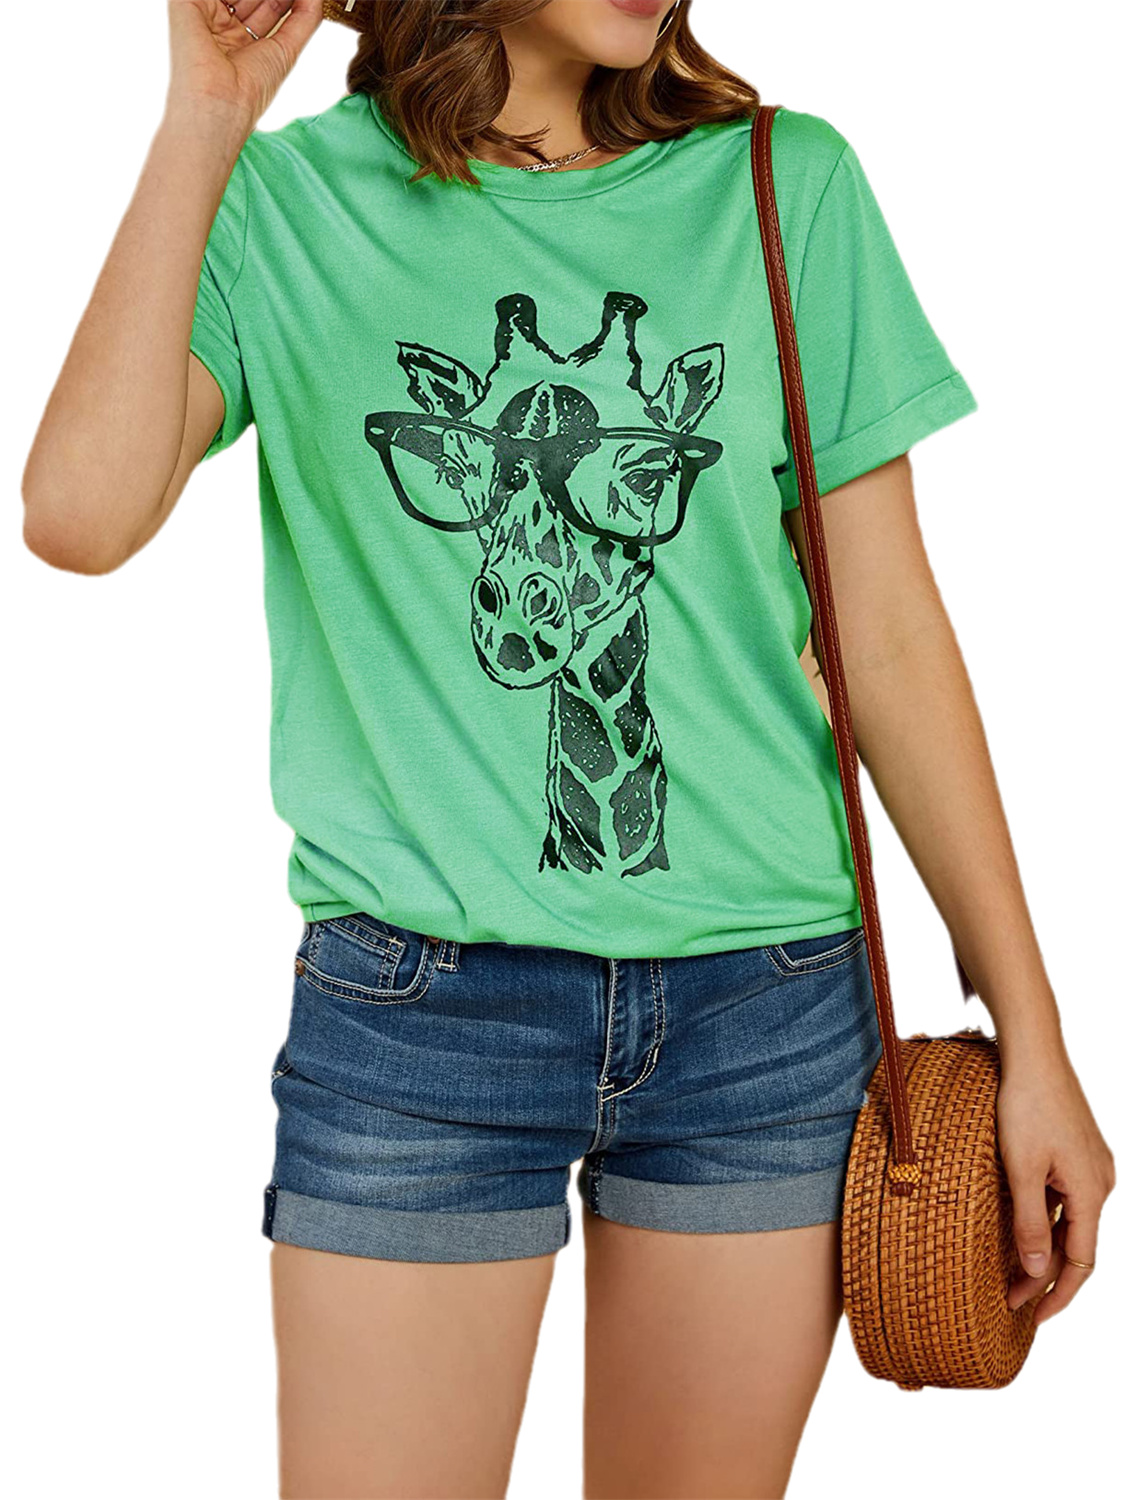 Giraffe Print Graphic Short Sleeve T-Shirt Plus Size Women Tops - image 2 of 5